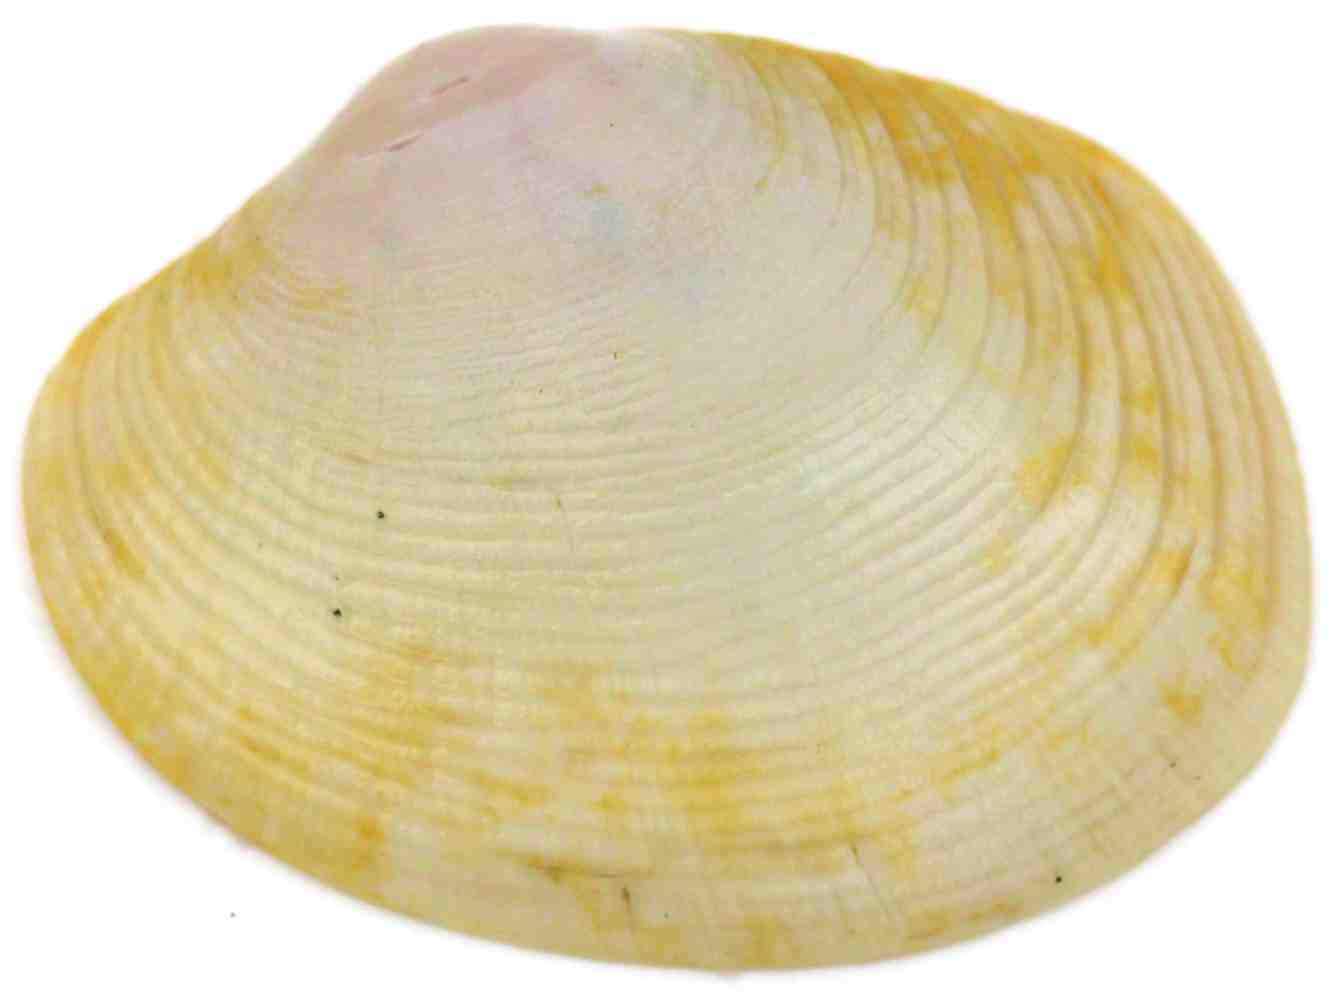 Oblong venus clam